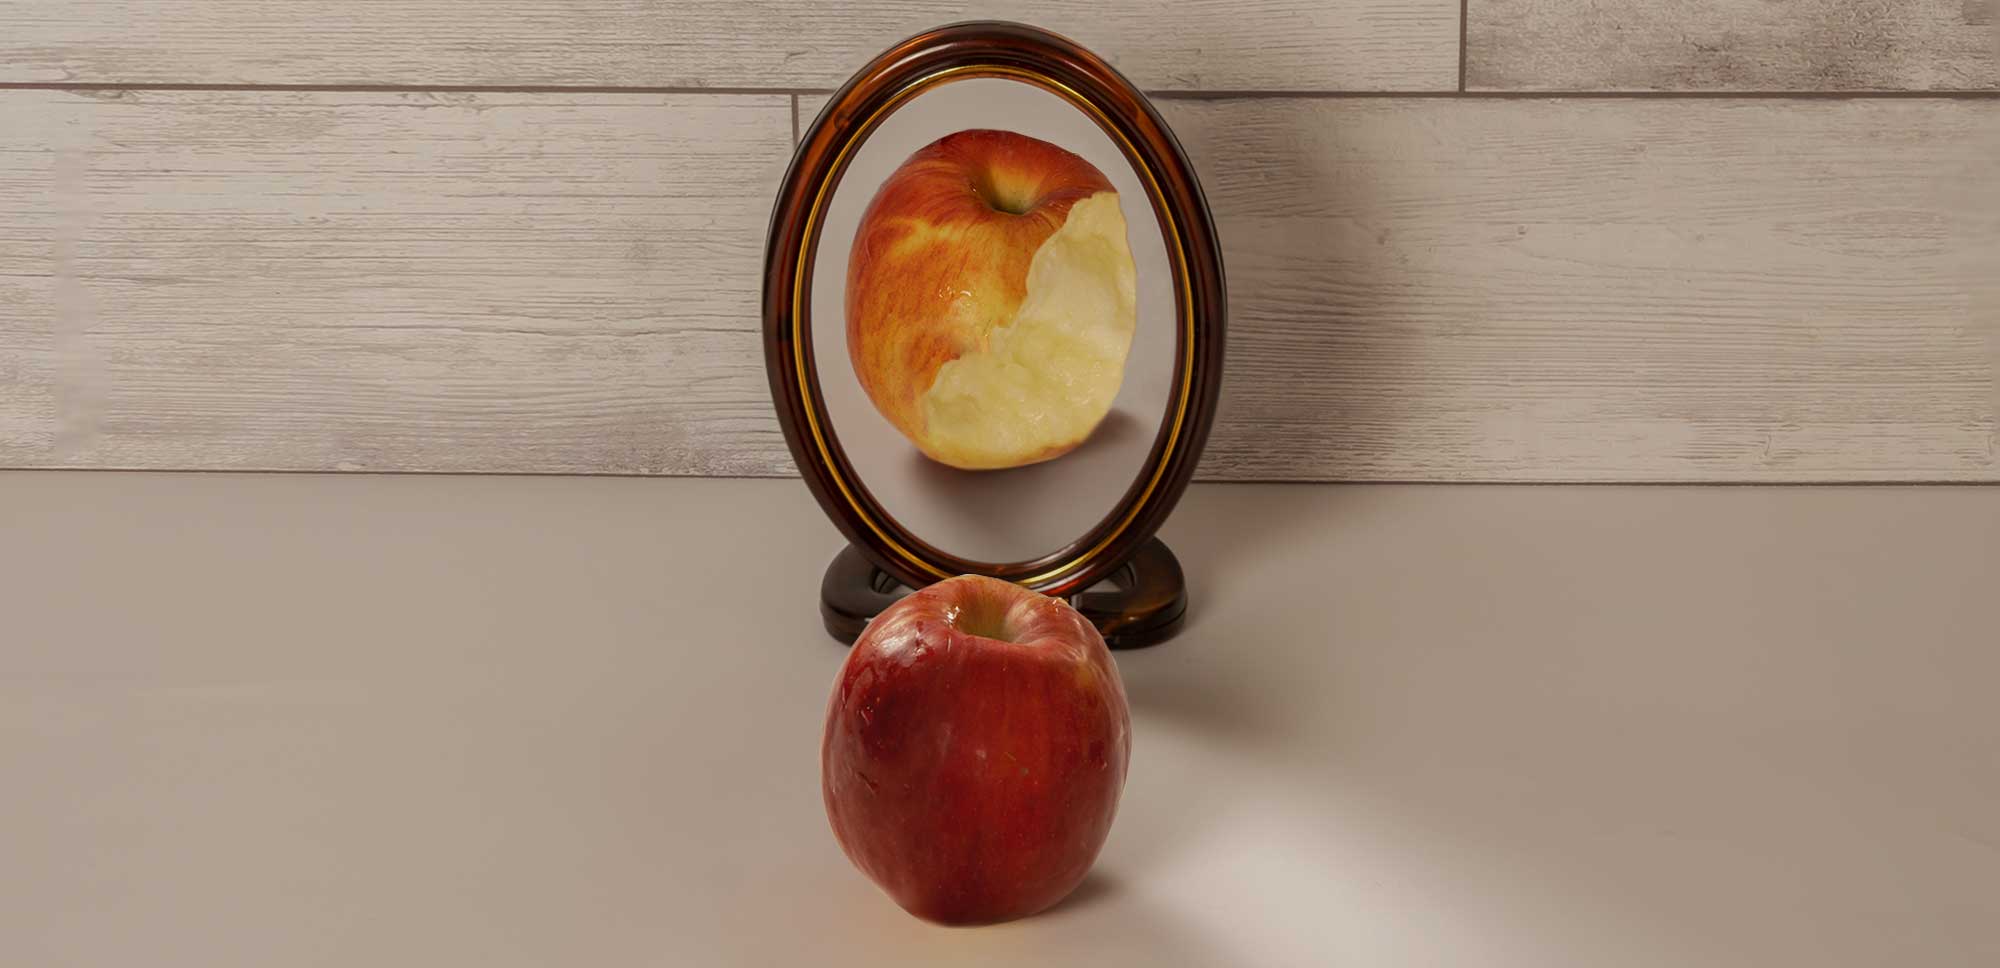 manzana roja mordida frente a espejo